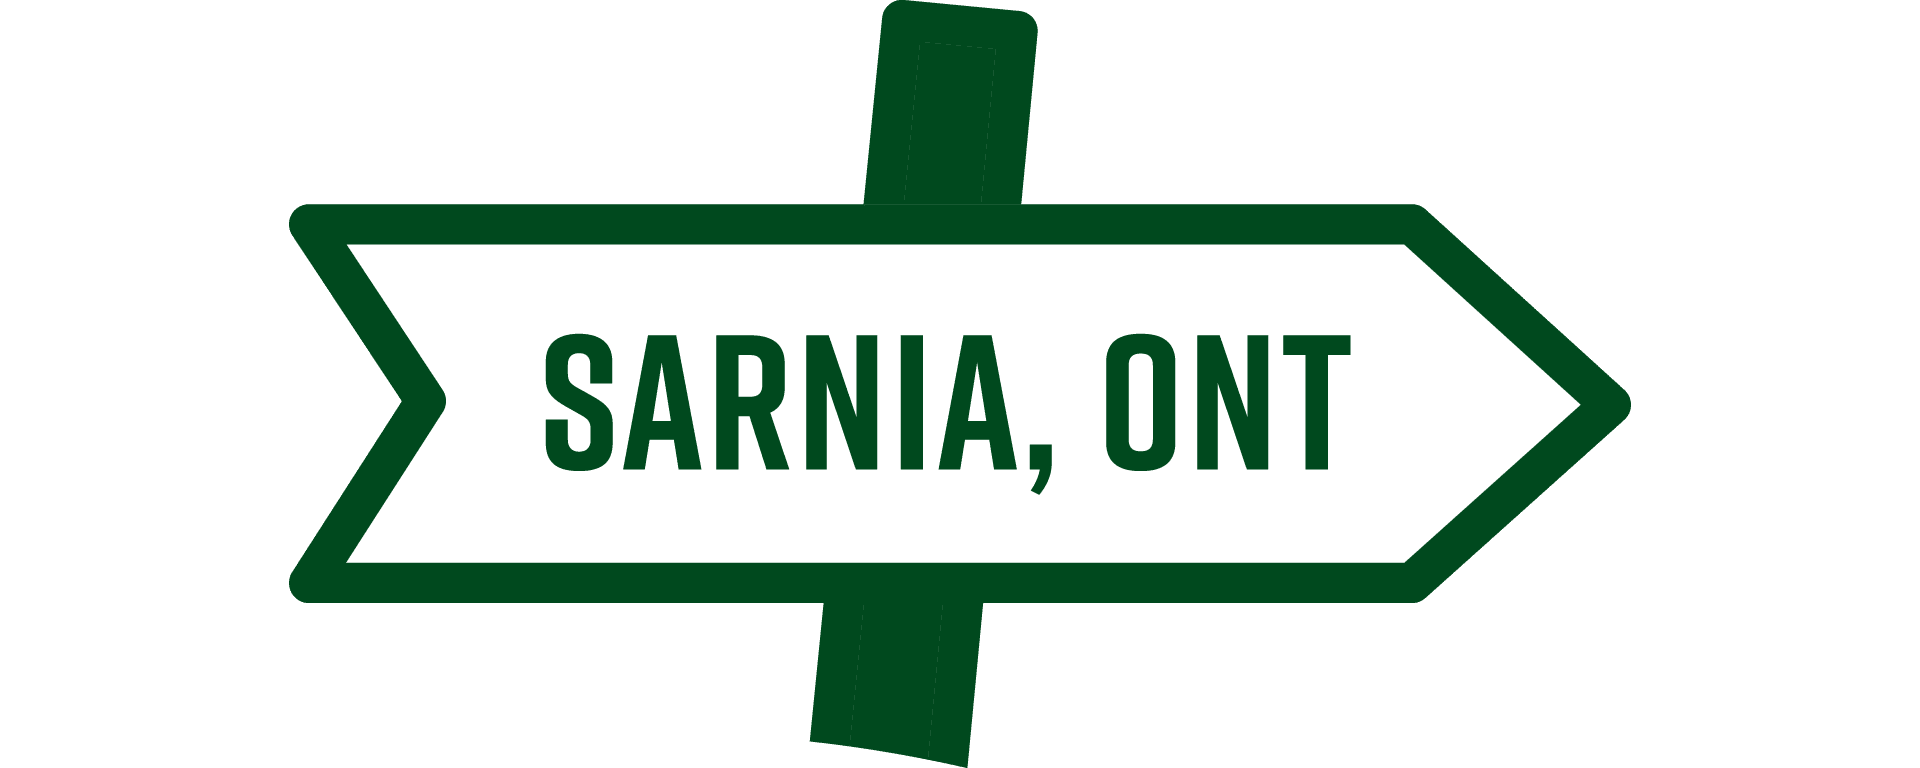 Roadsign to Sarnia